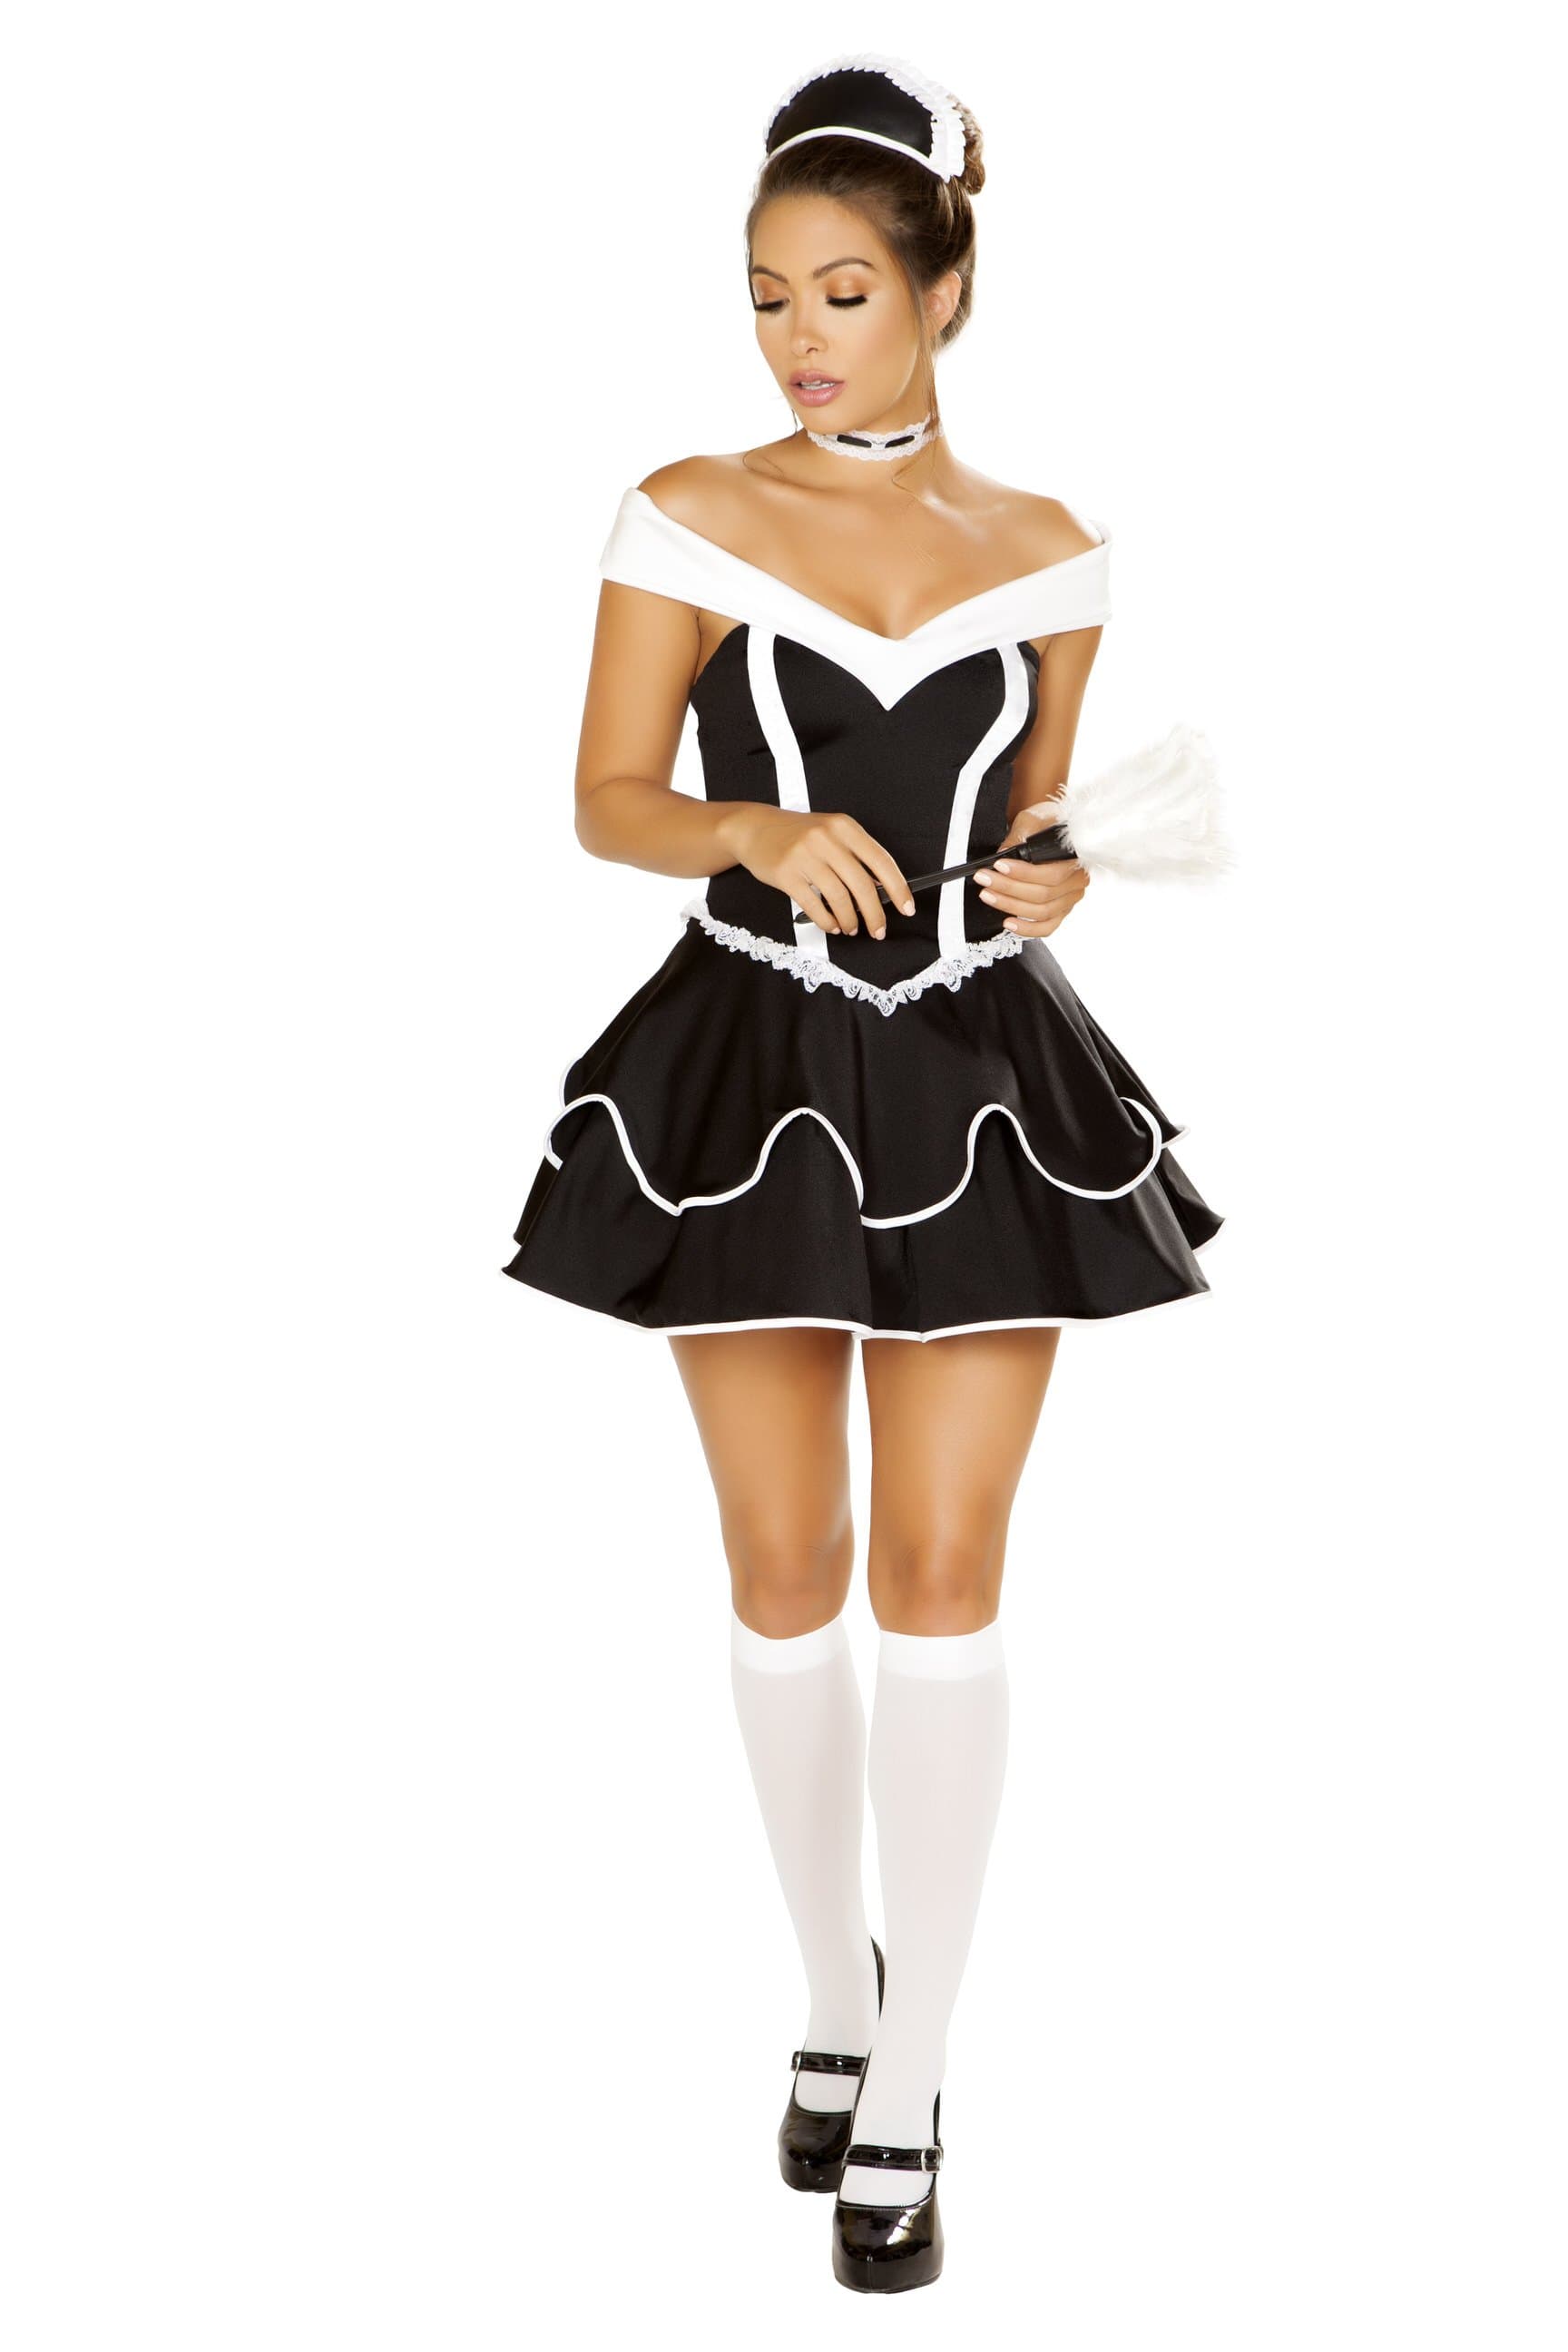 Roma Small / Black 4pc Sexy Chamber Maid SHC-4886-S-R Apparel & Accessories > Costumes & Accessories > Costumes